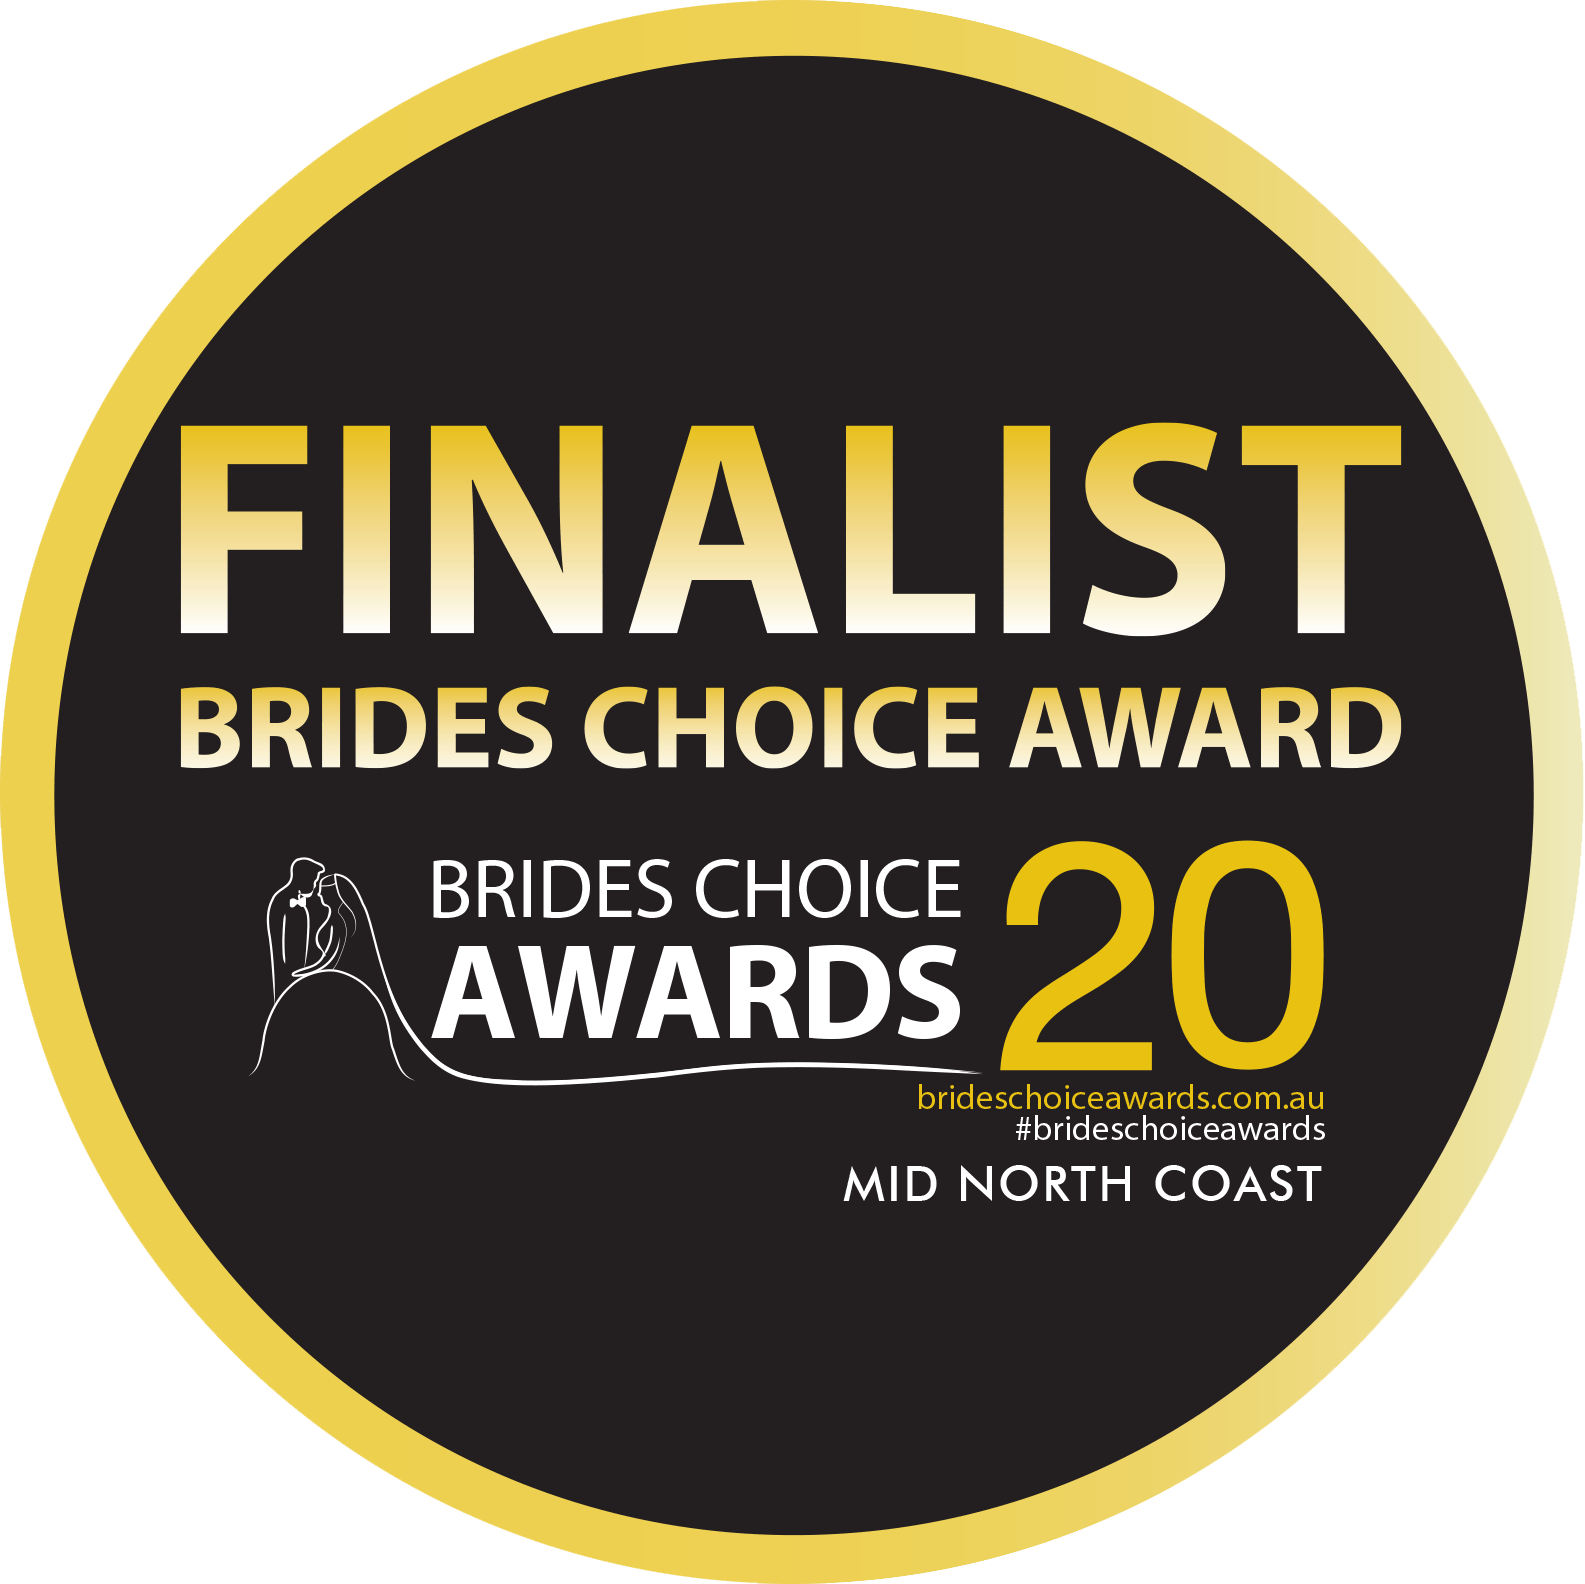 Brides Choice Award Finalist